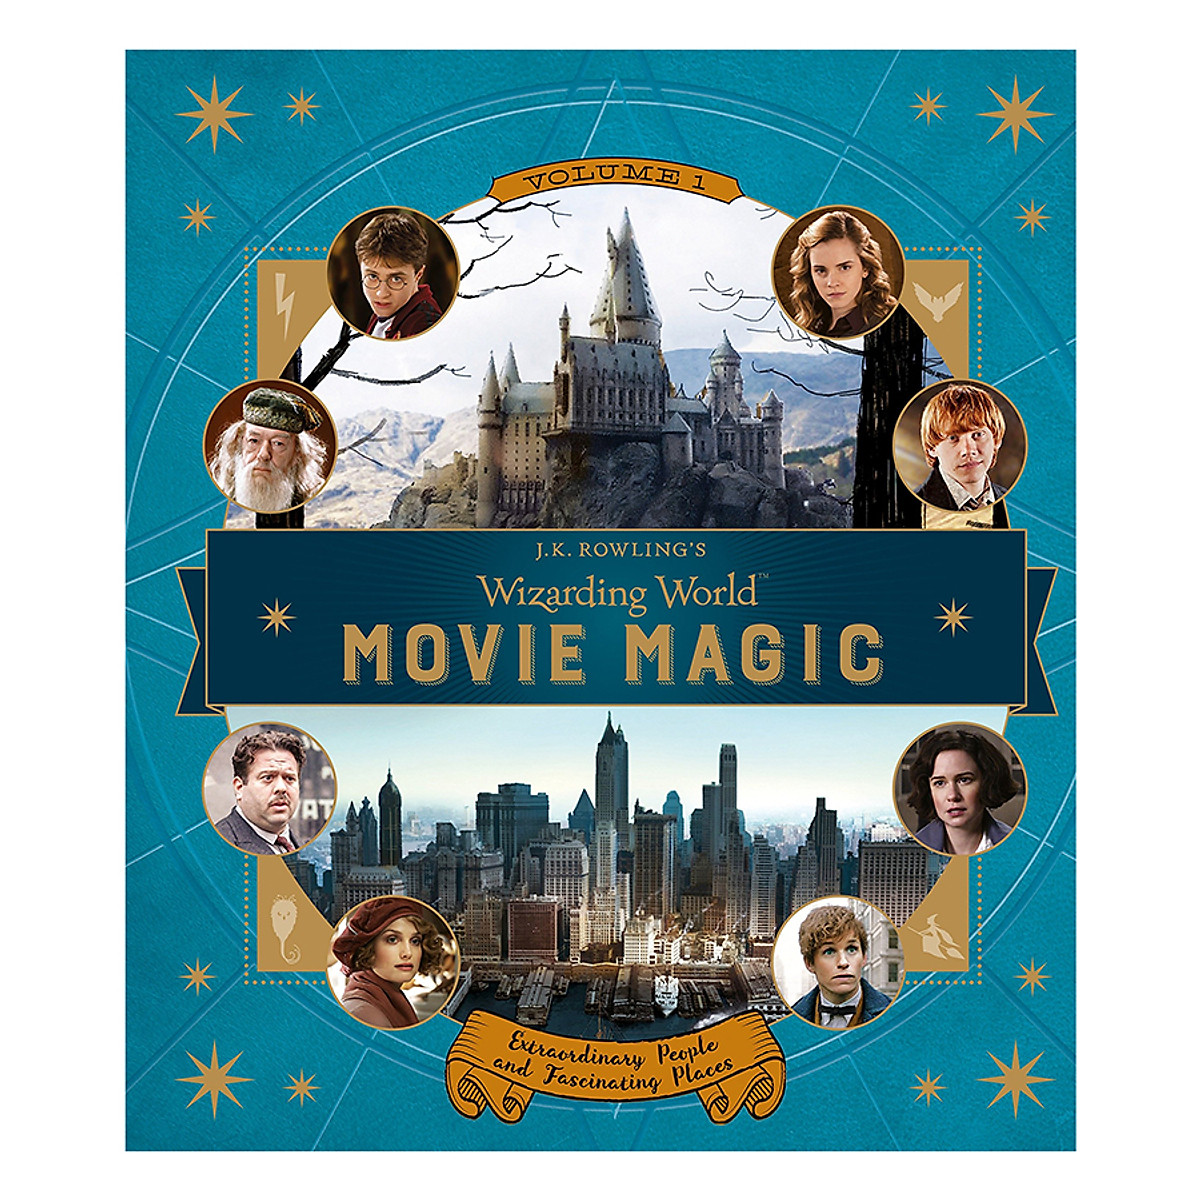 [Hàng thanh lý miễn đổi trả] J.K. Rowling’s Wizarding World: Movie Magic Volume One: Extraordinary People and Fascinating Places